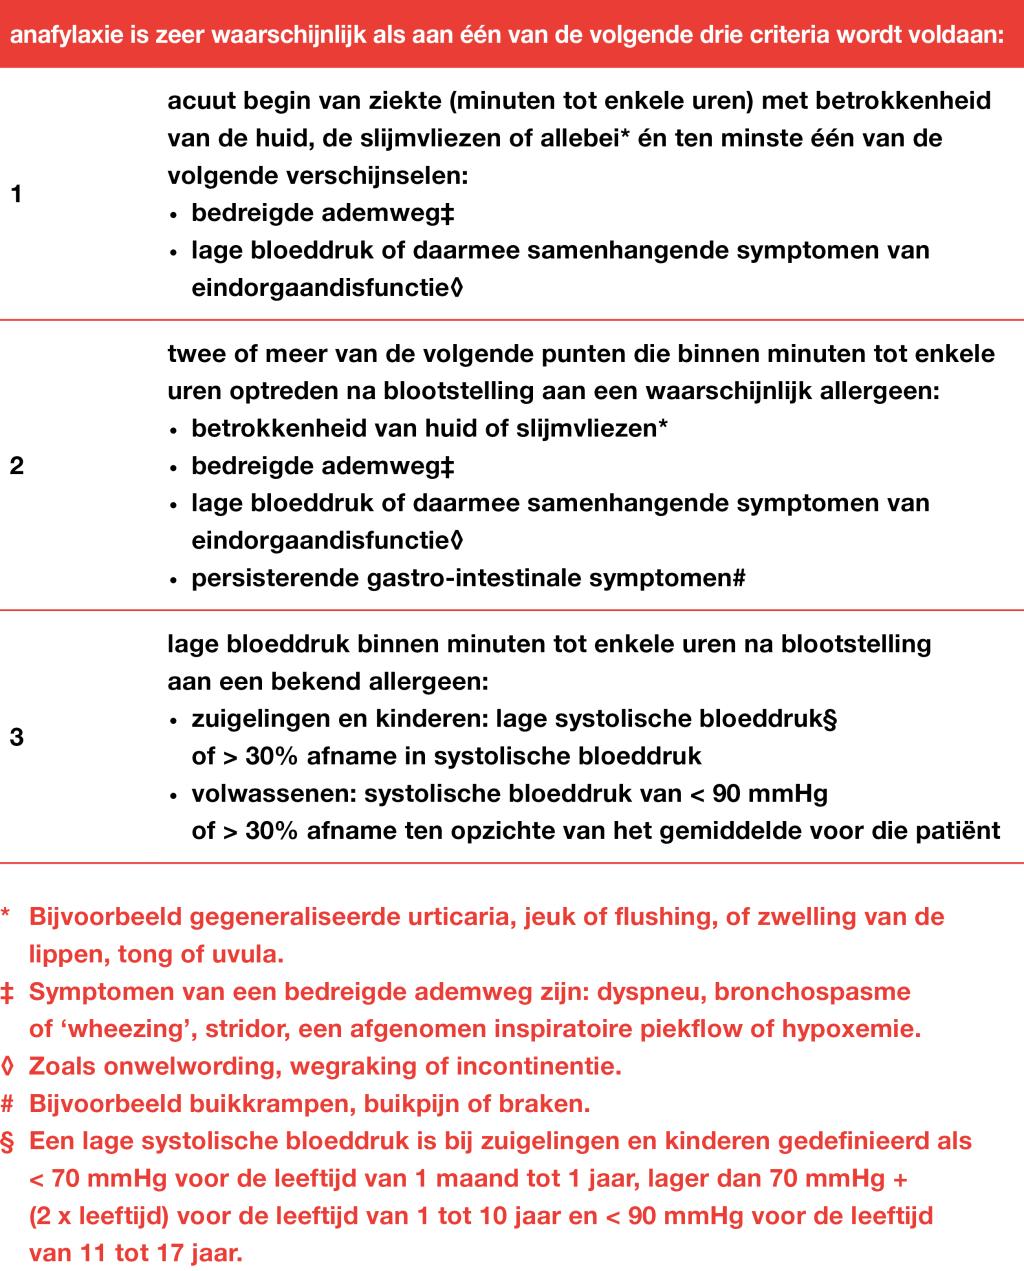 Tabel 2 | Klinische criteria voor de diagnose anafylaxie[4]